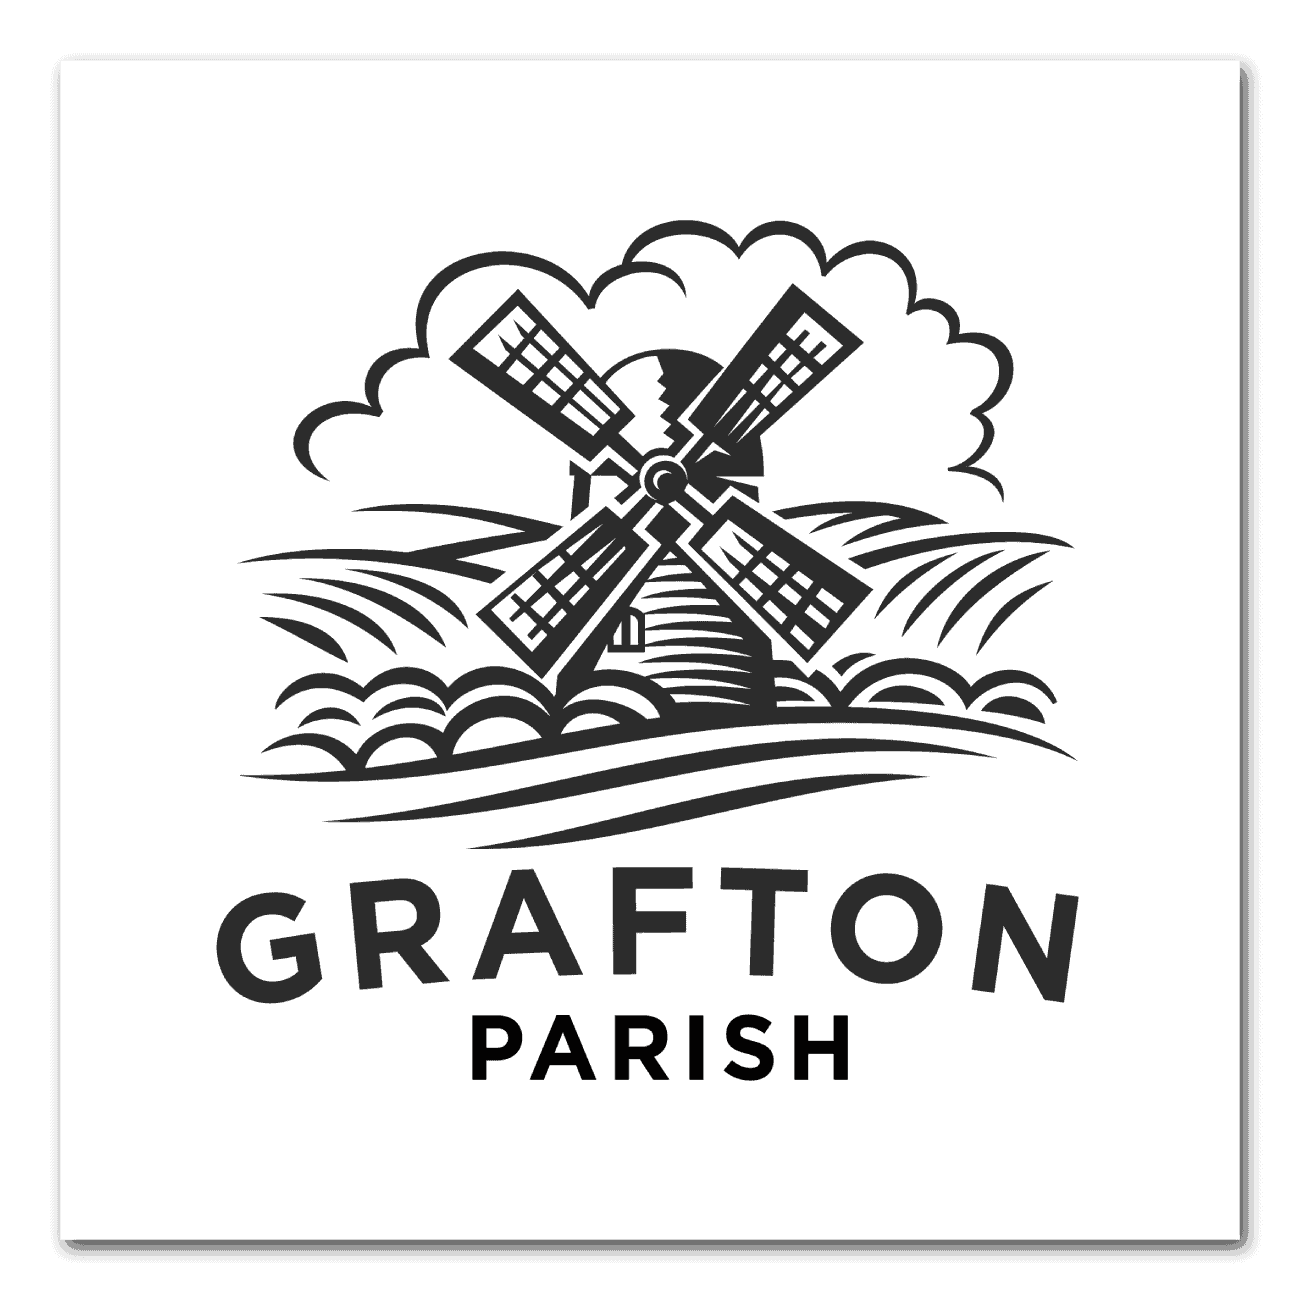 Grafton Parish logo design